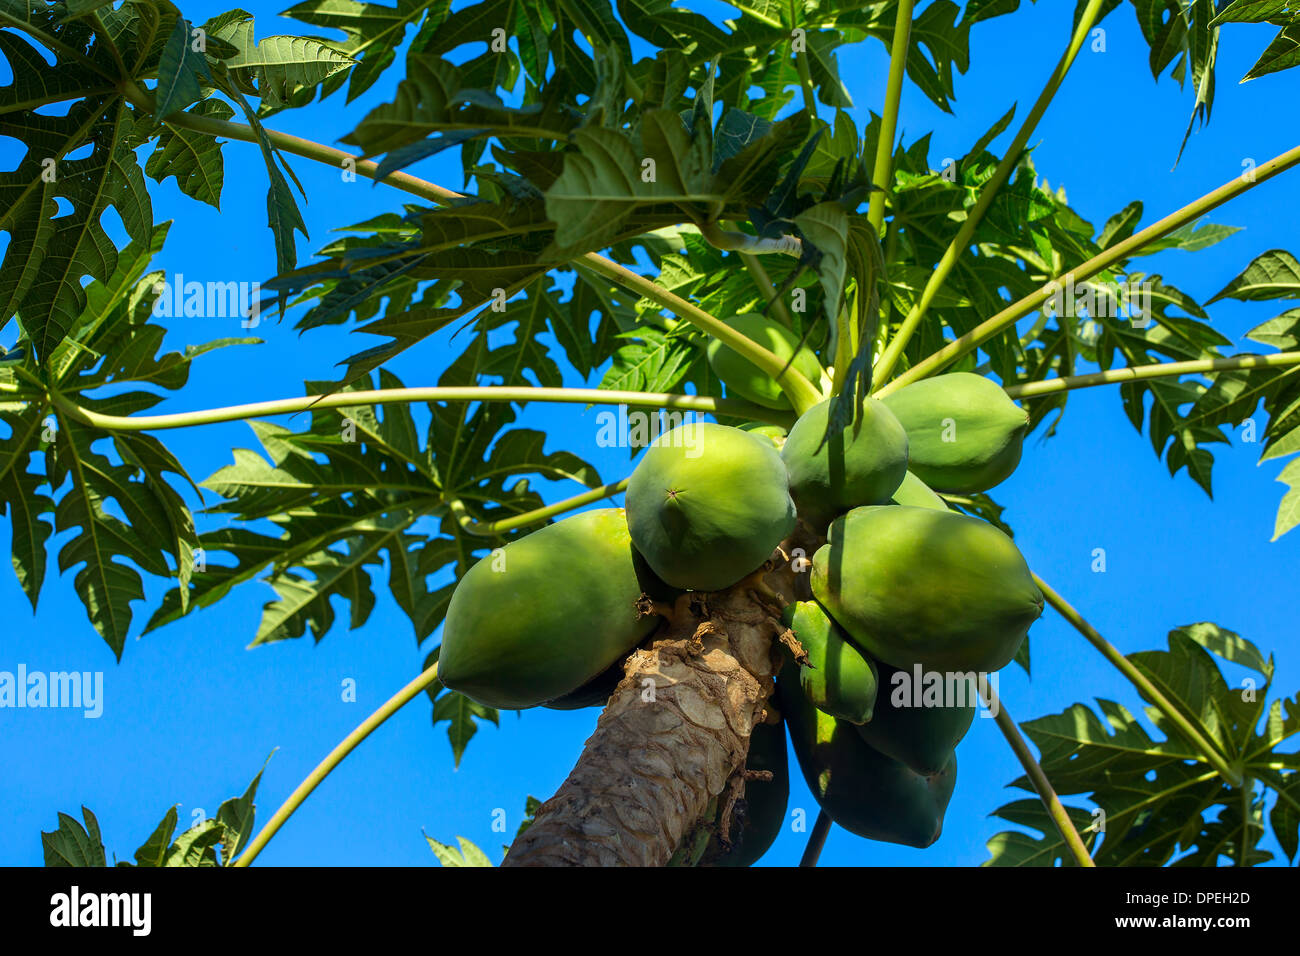 Green papayas growing on a tree Stock Photo